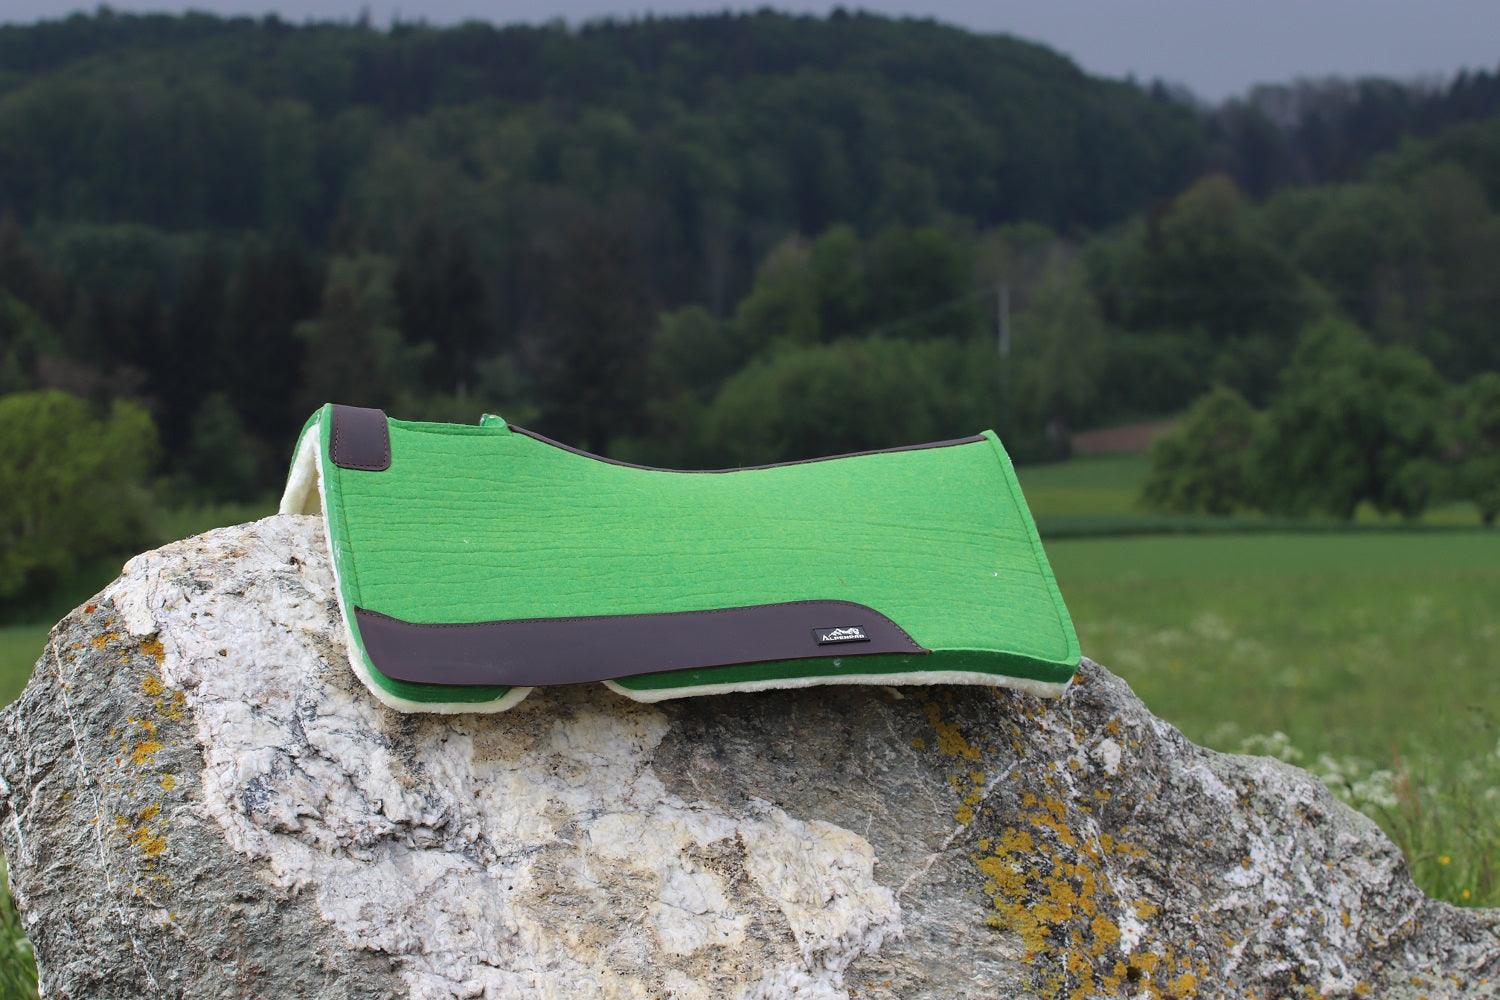 AlpenPad Comfort Line – Performance Filzpad mit Fellunterseite – Grün - Horse_Art_Bodensee